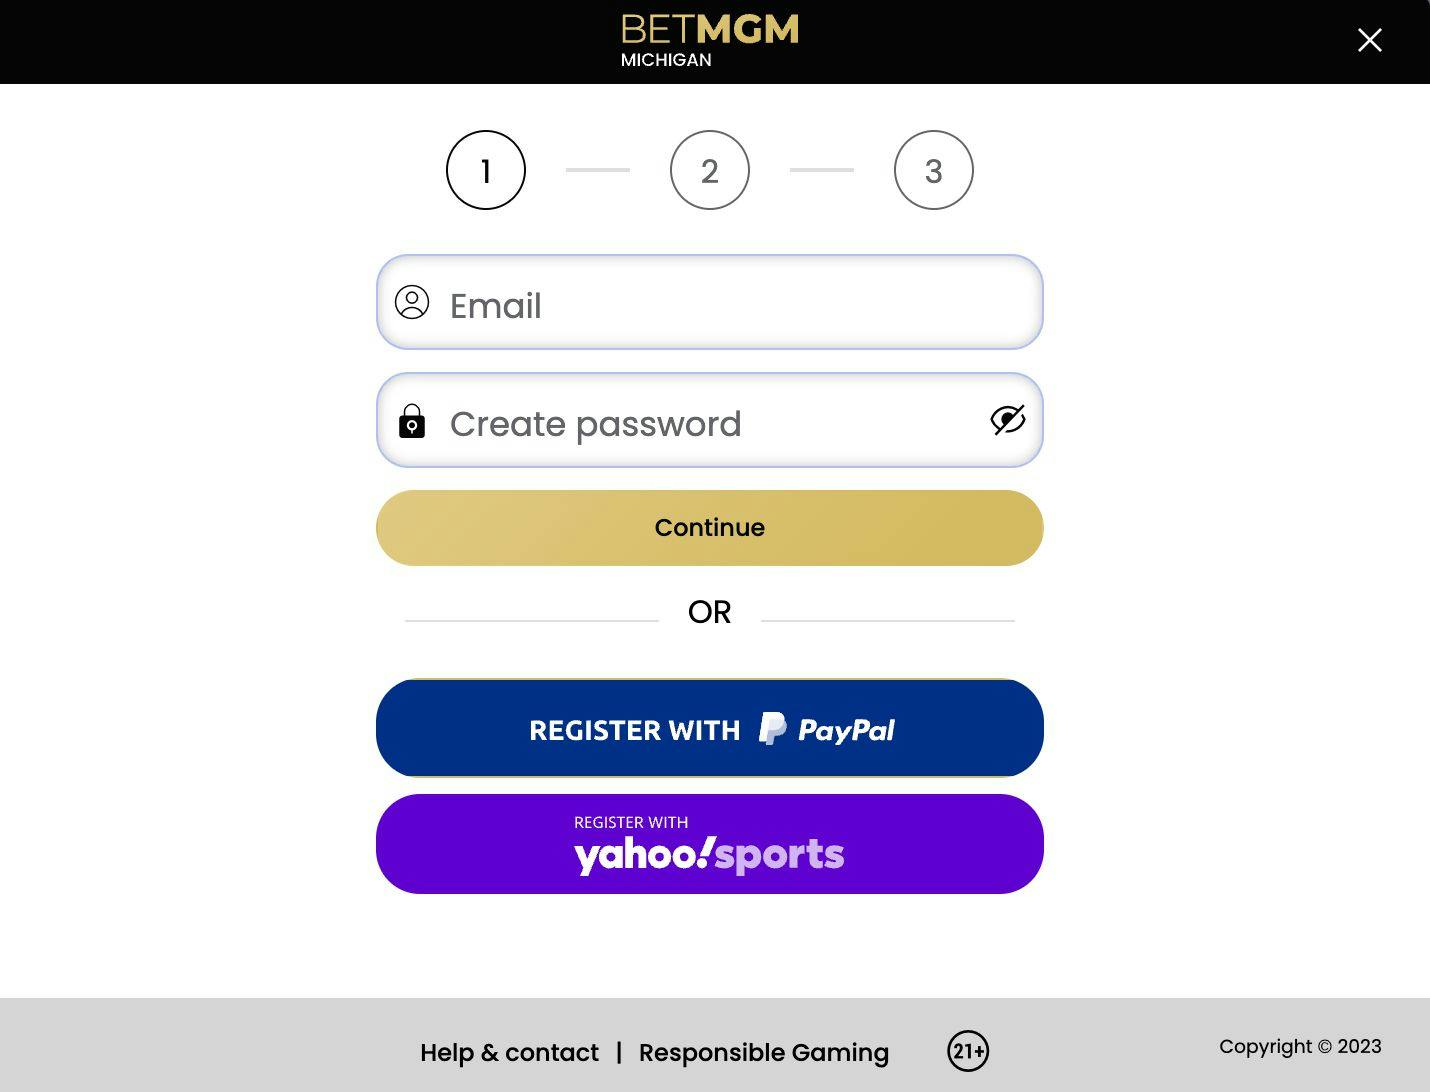 Image of BetMGM Michigan's Registration Page